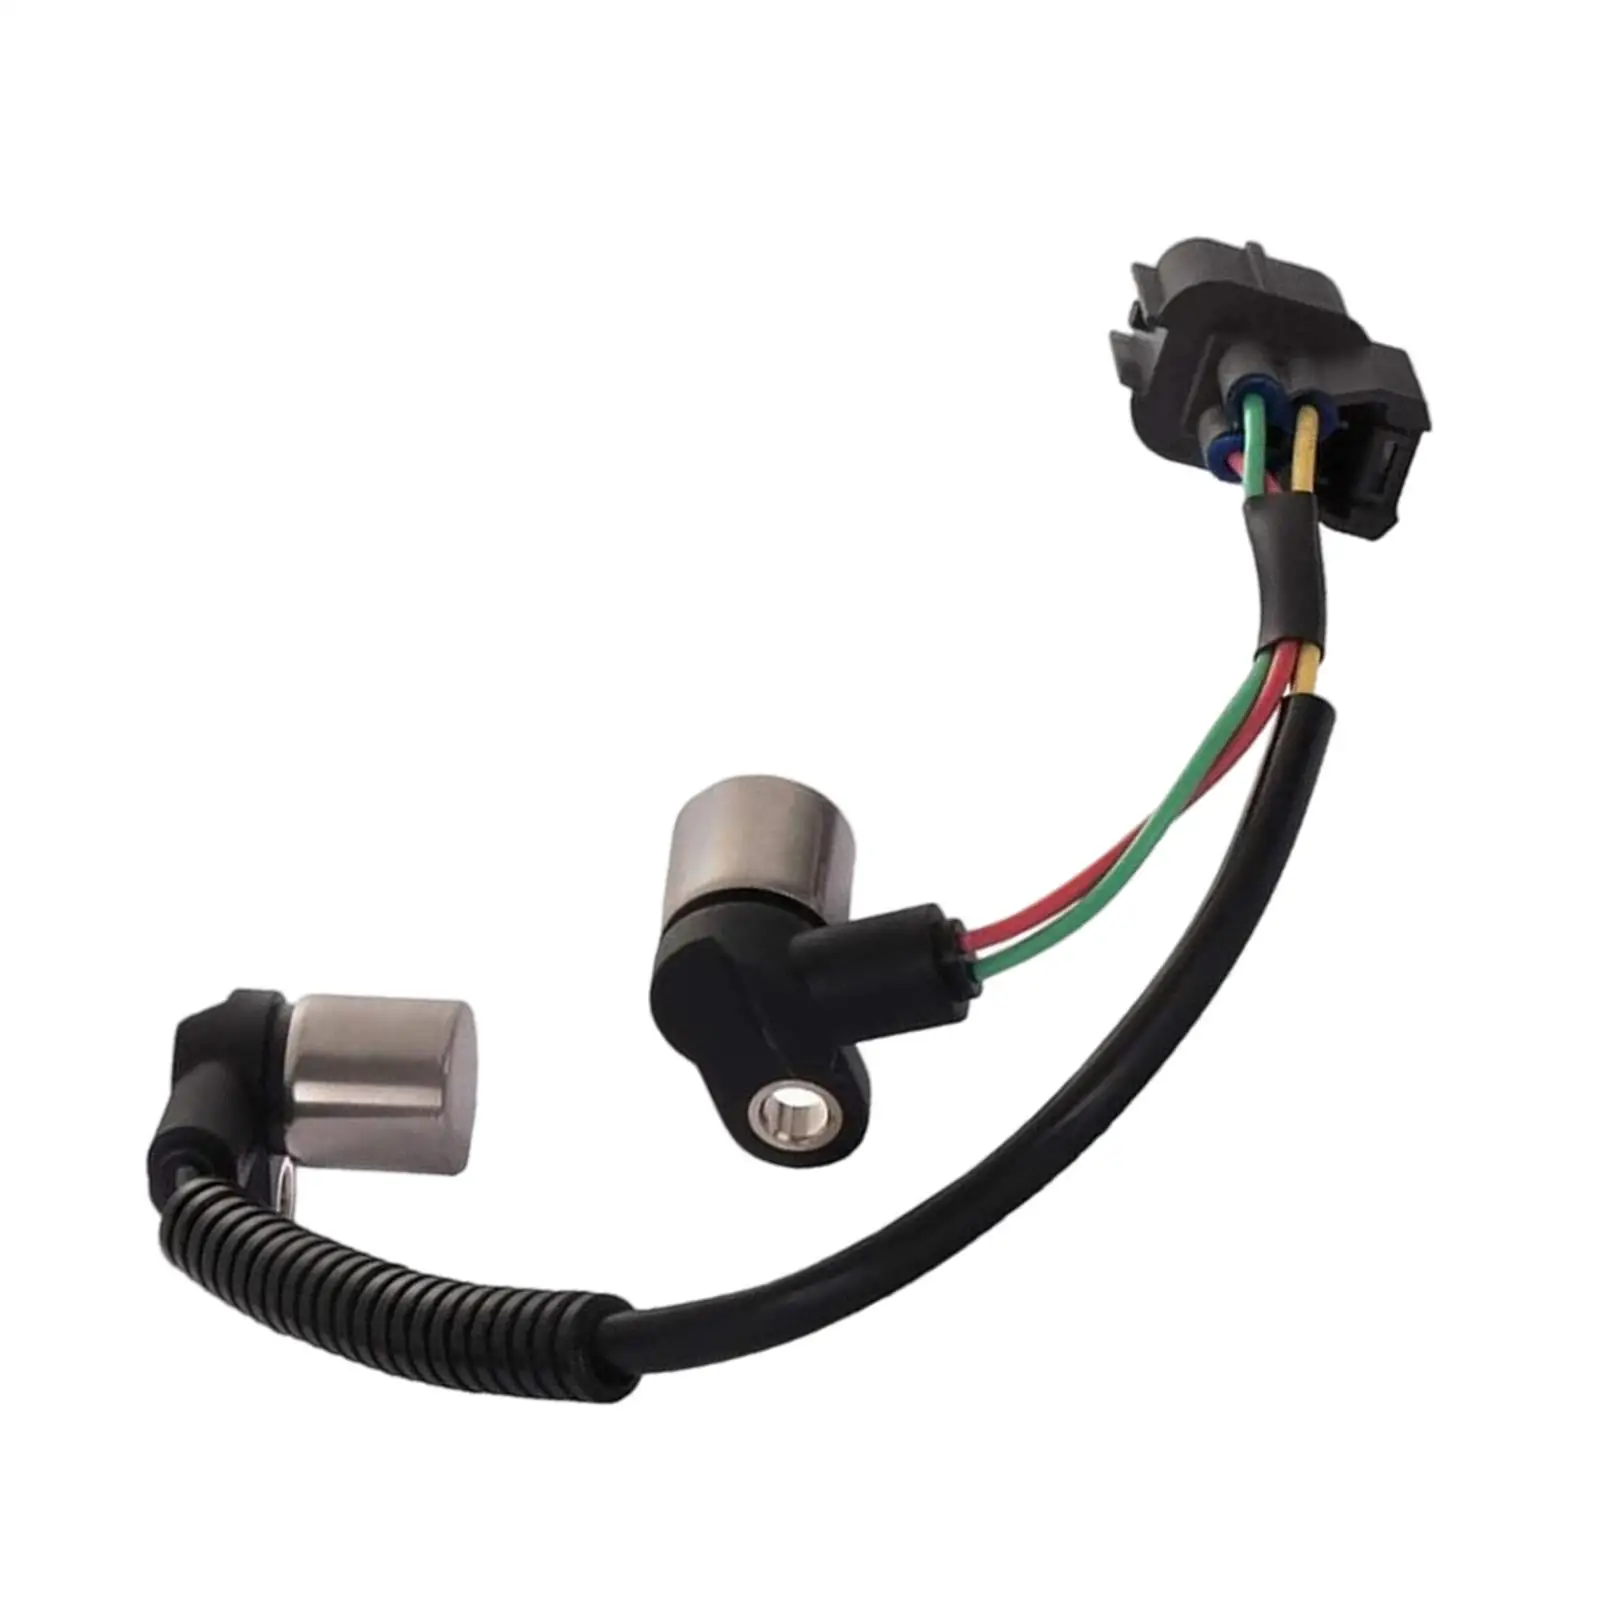 Camshaft Position Sensor Replacement Crankshaft Sensor Fit for Honda Accord 3.0 V6 98-2002 37840-P8A-A01 Easy Installation